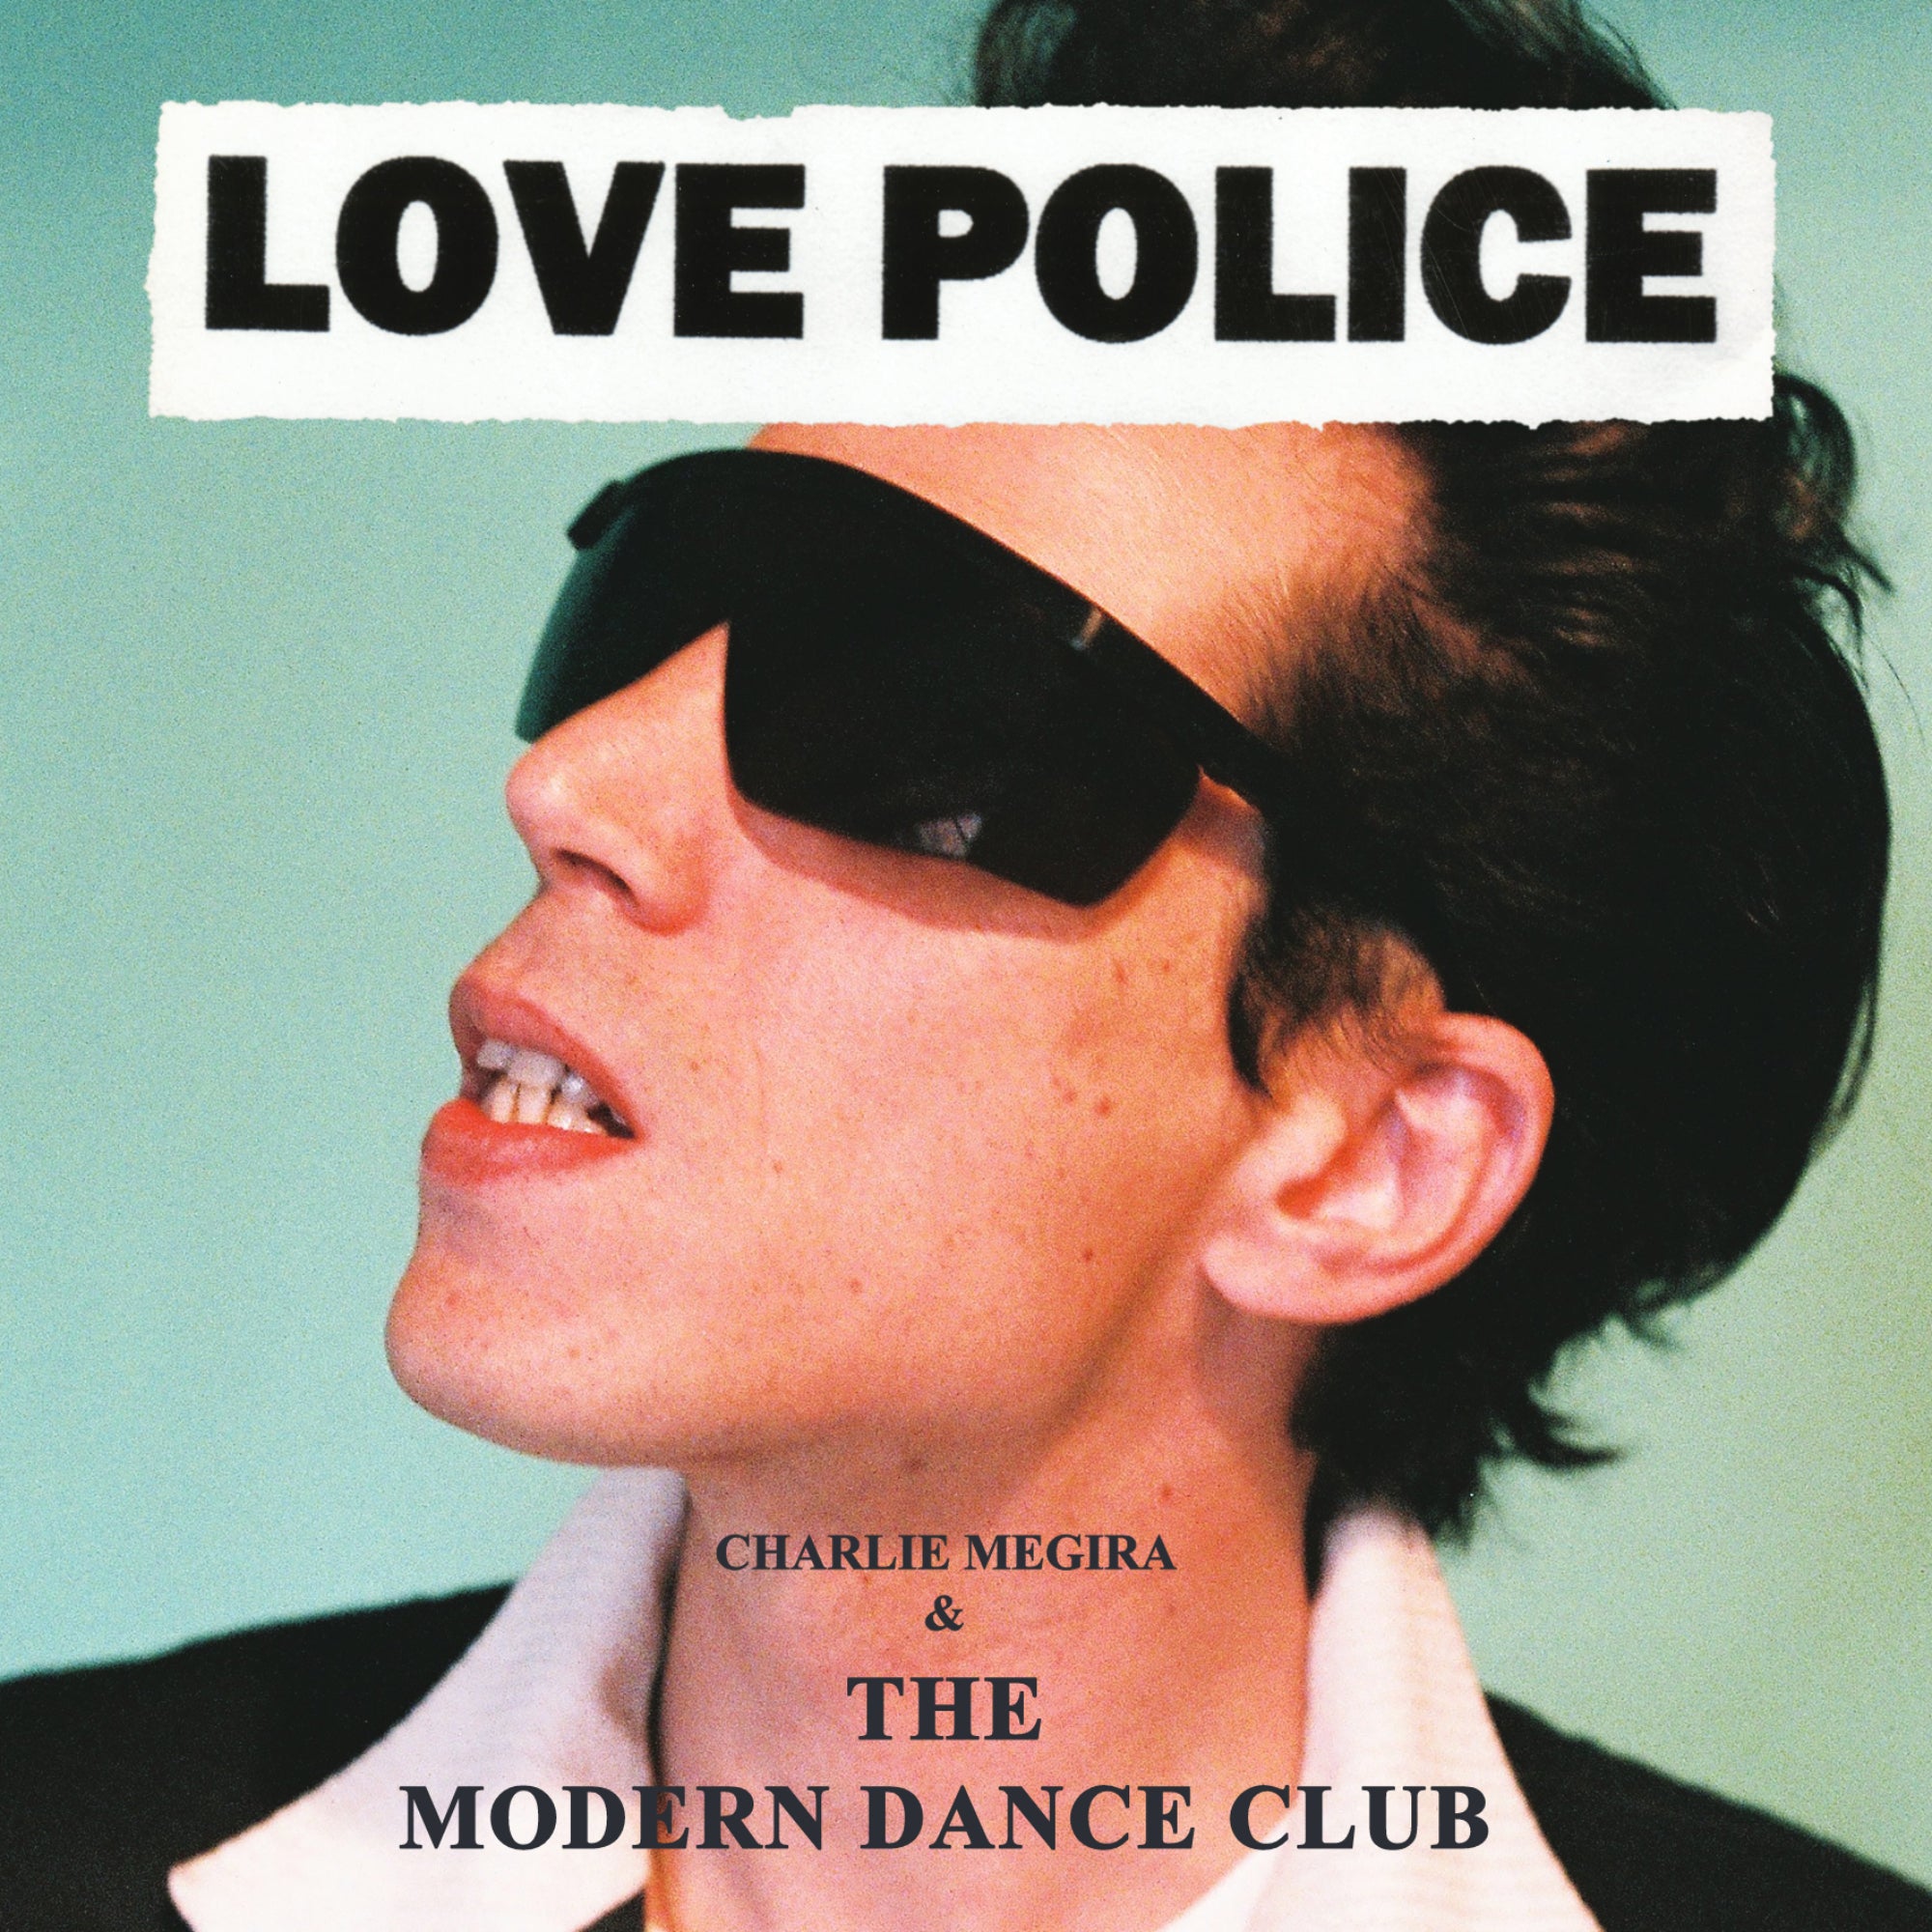 CHARLIE MEGIRA & THE MODERN DANCE CLUB - LOVE POLICE Vinyl 2xLP